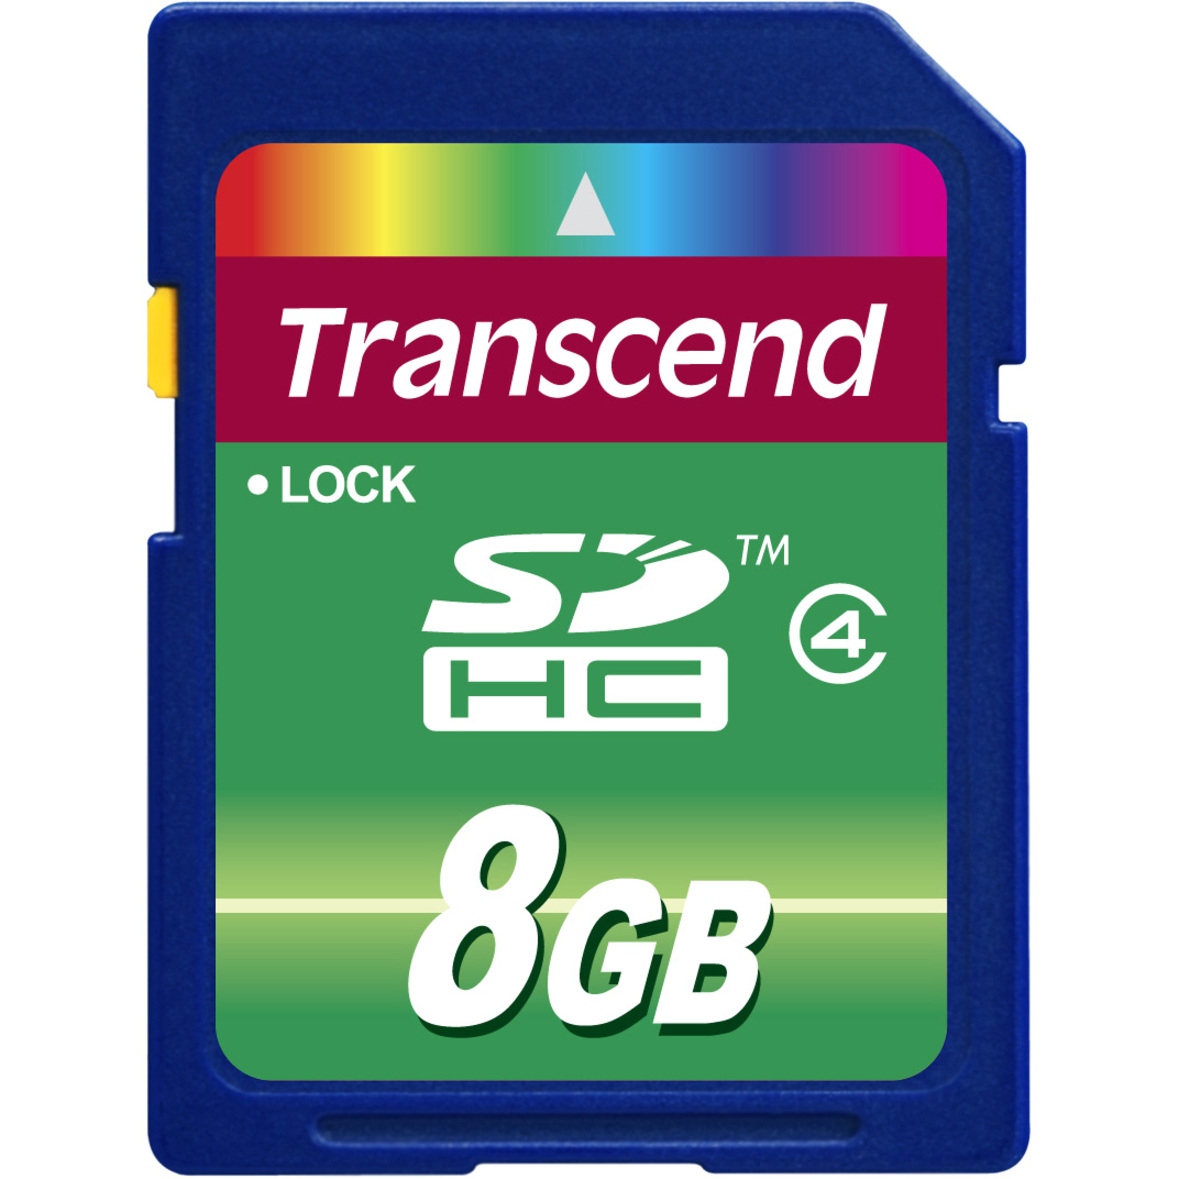 Transcend 8 GB Class 4 SDHC - image 1 of 2